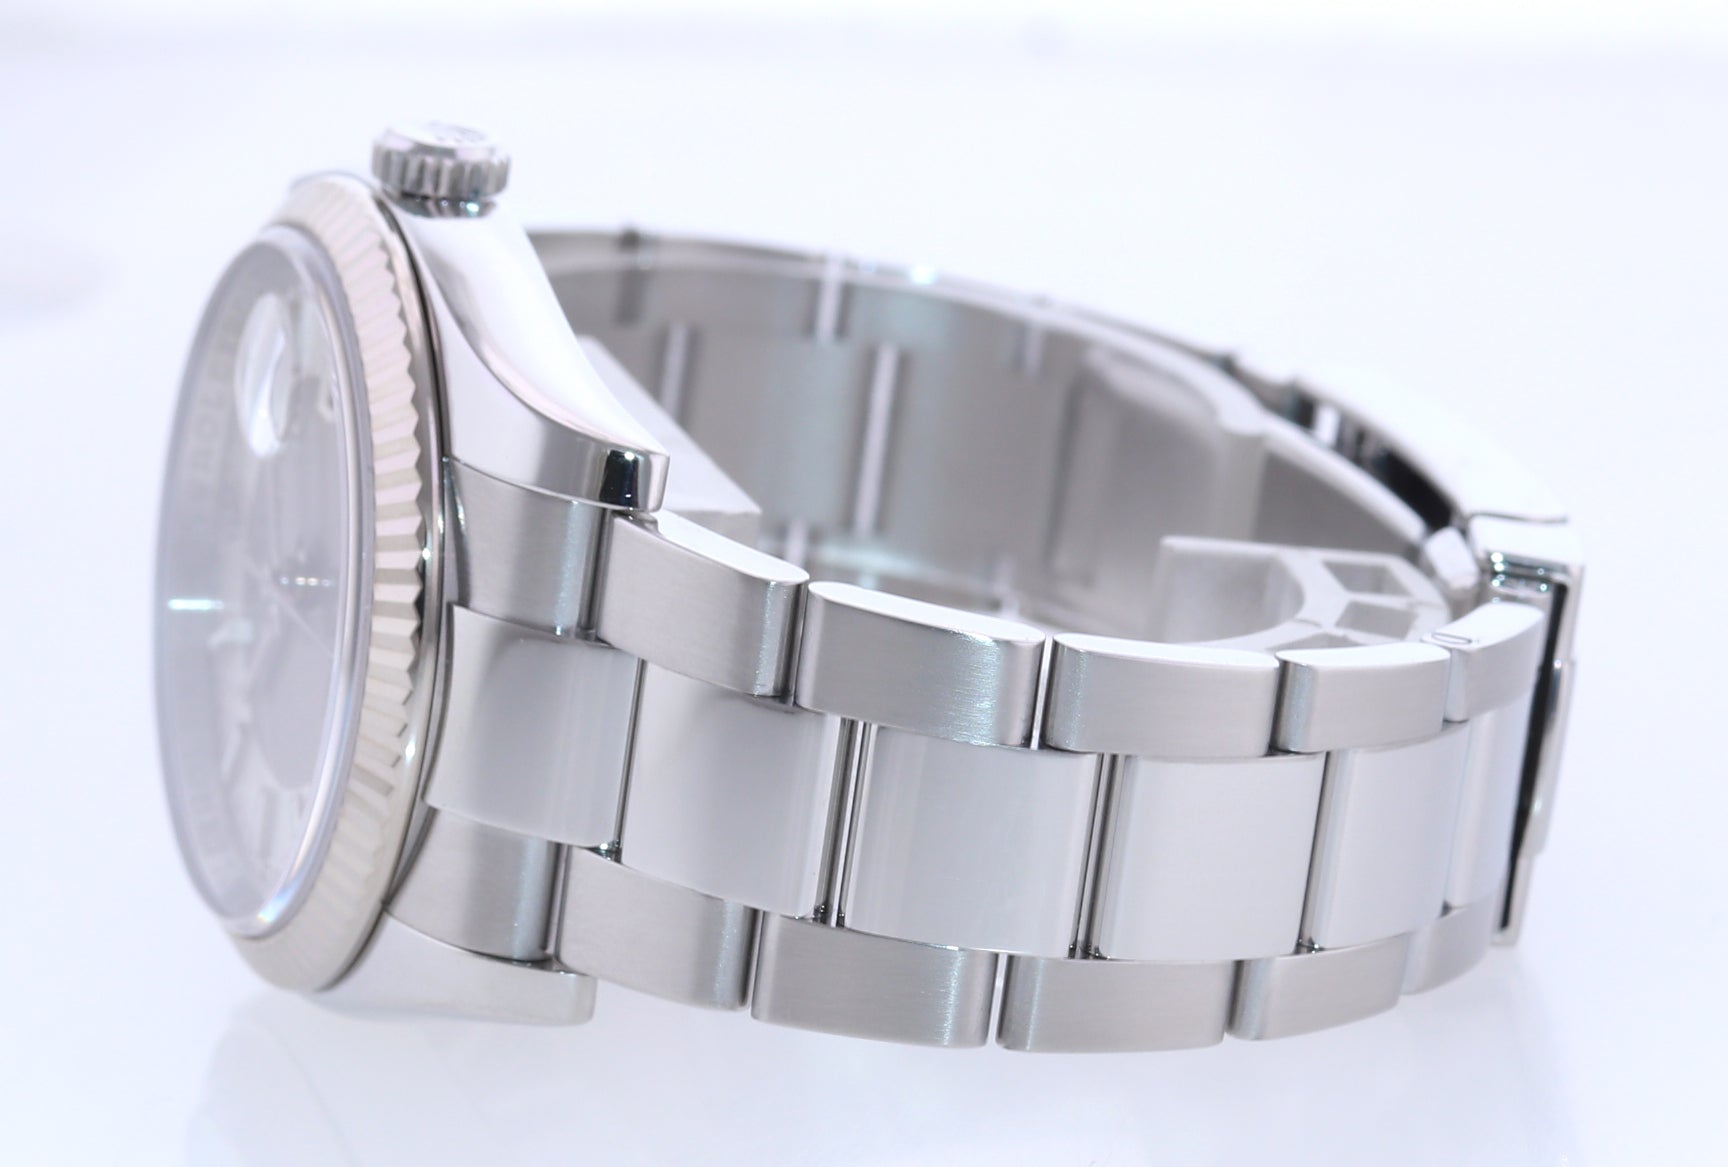 2007 Rolex DateJust Silver Tuxedo 116234 36mm Oyster Steel Watch Box